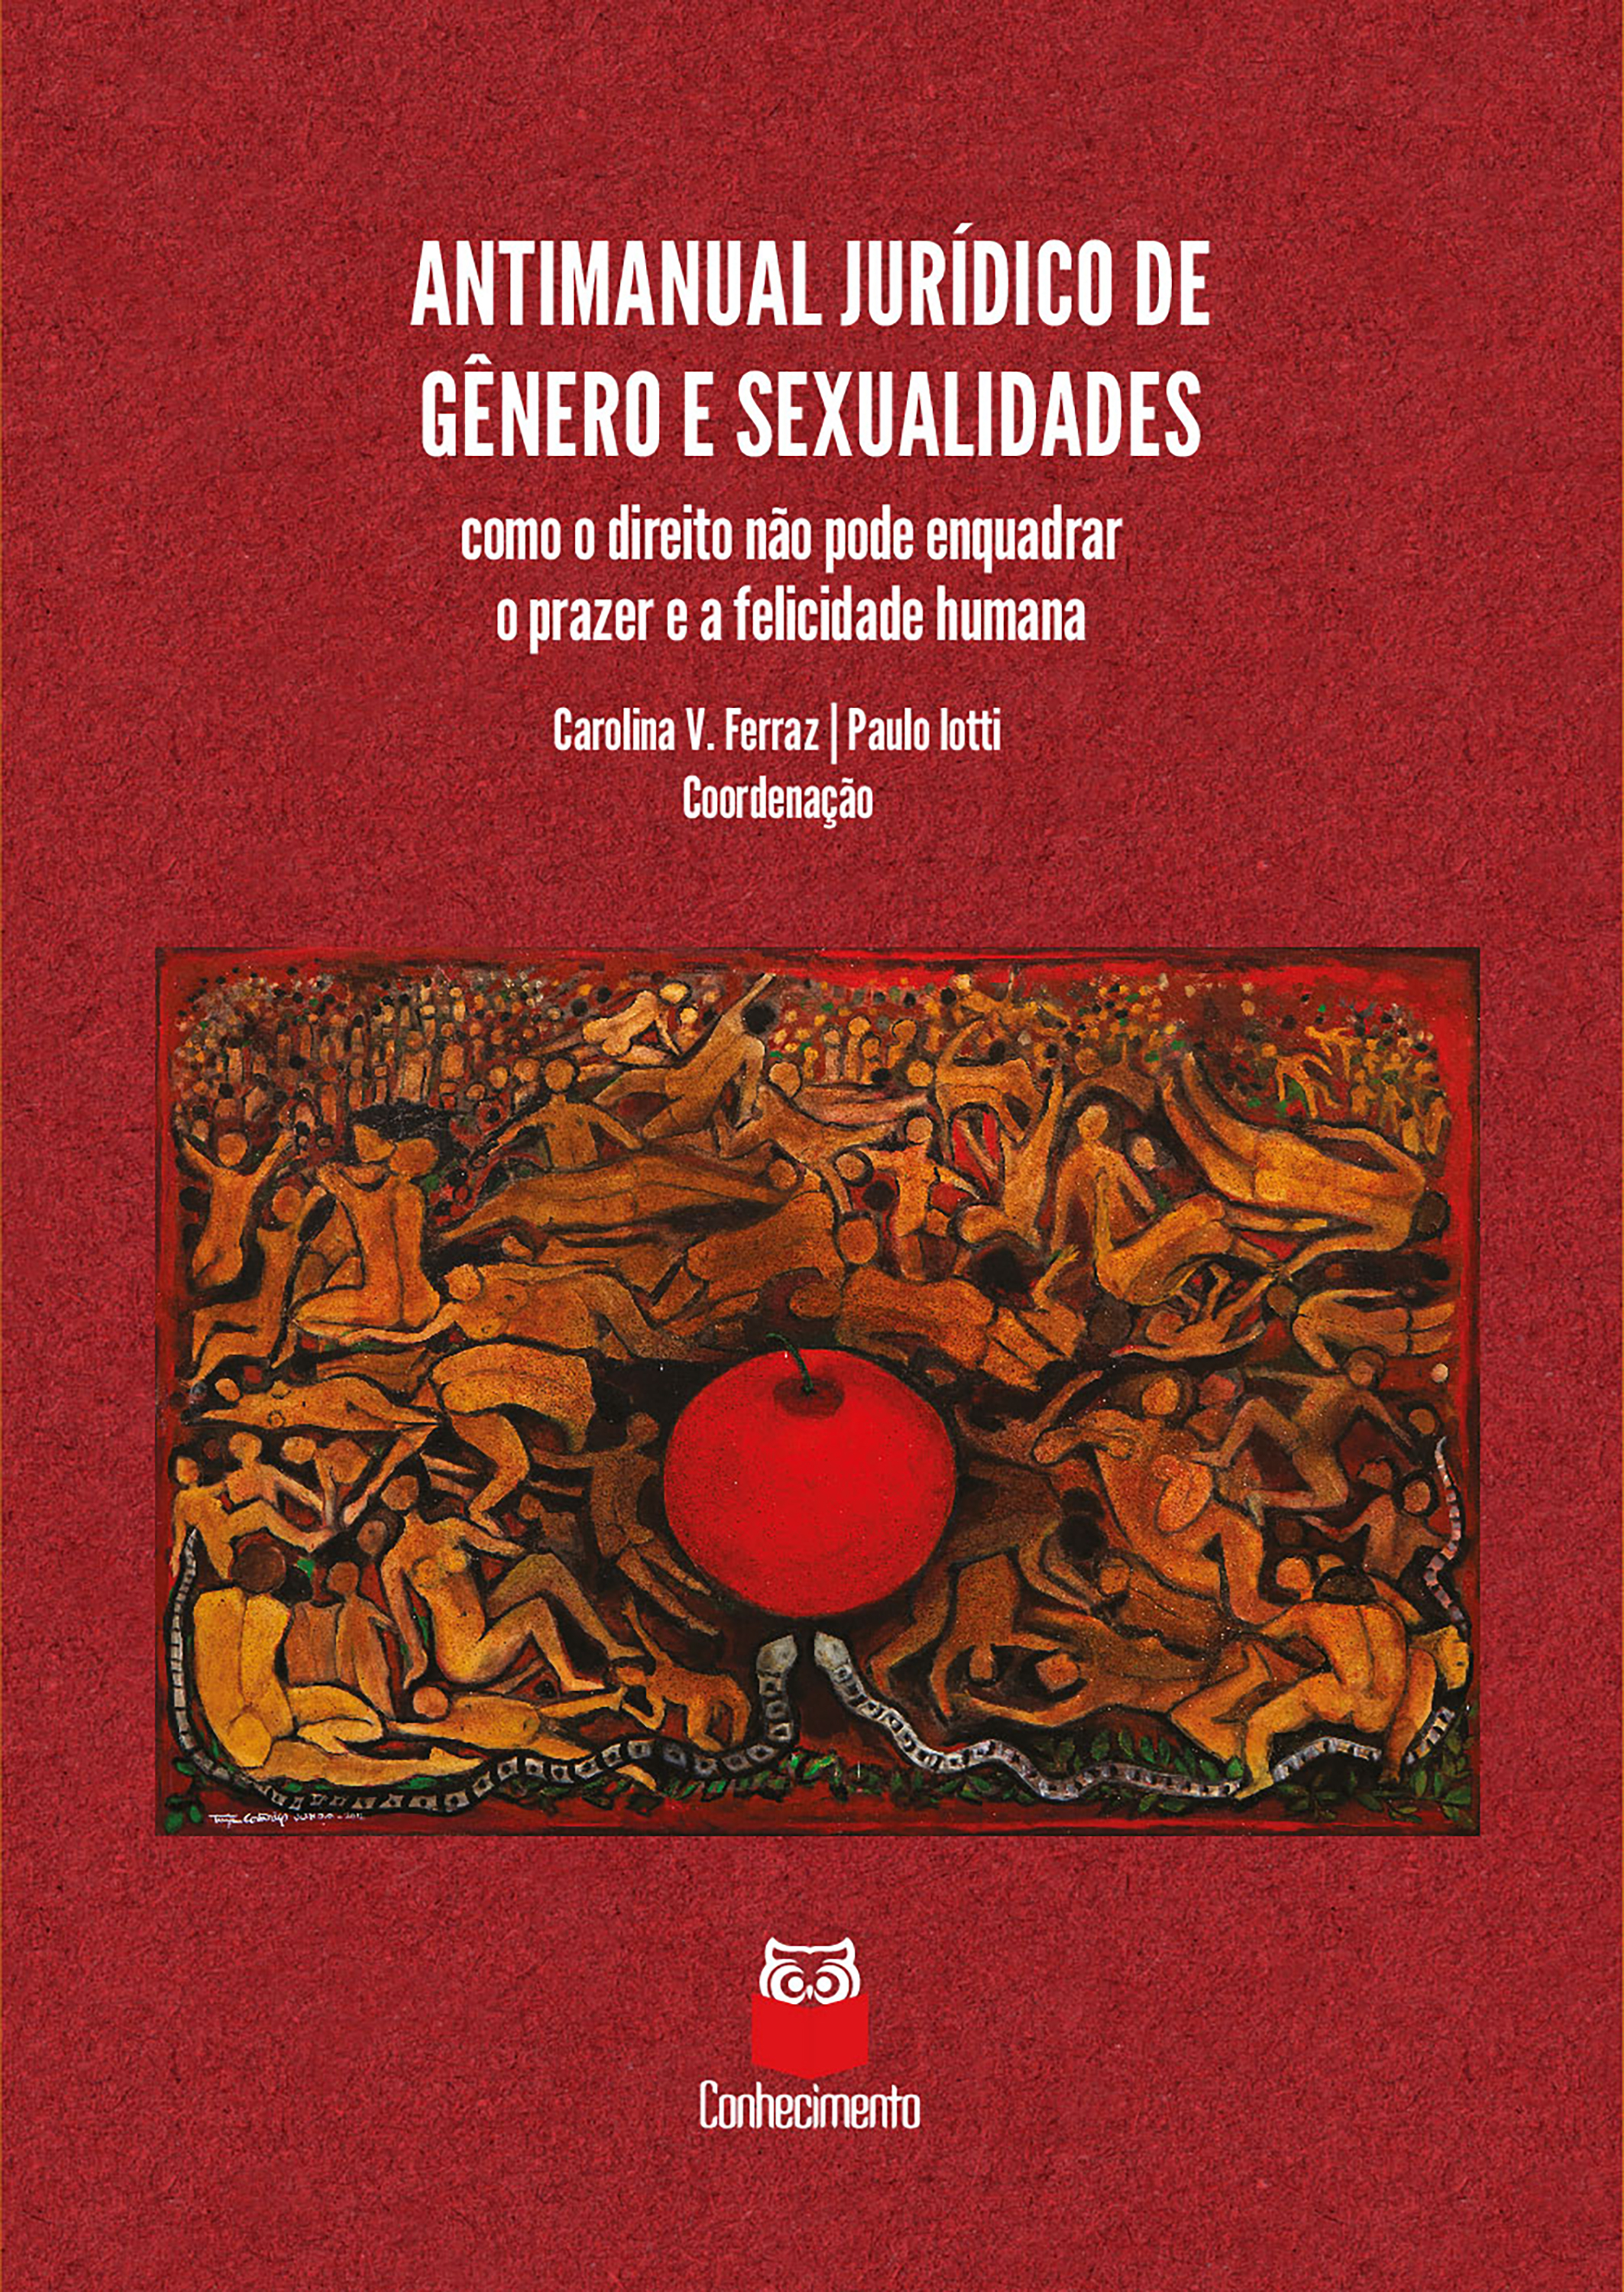 Antimanual Jurídico de Gênero e Sexualidades